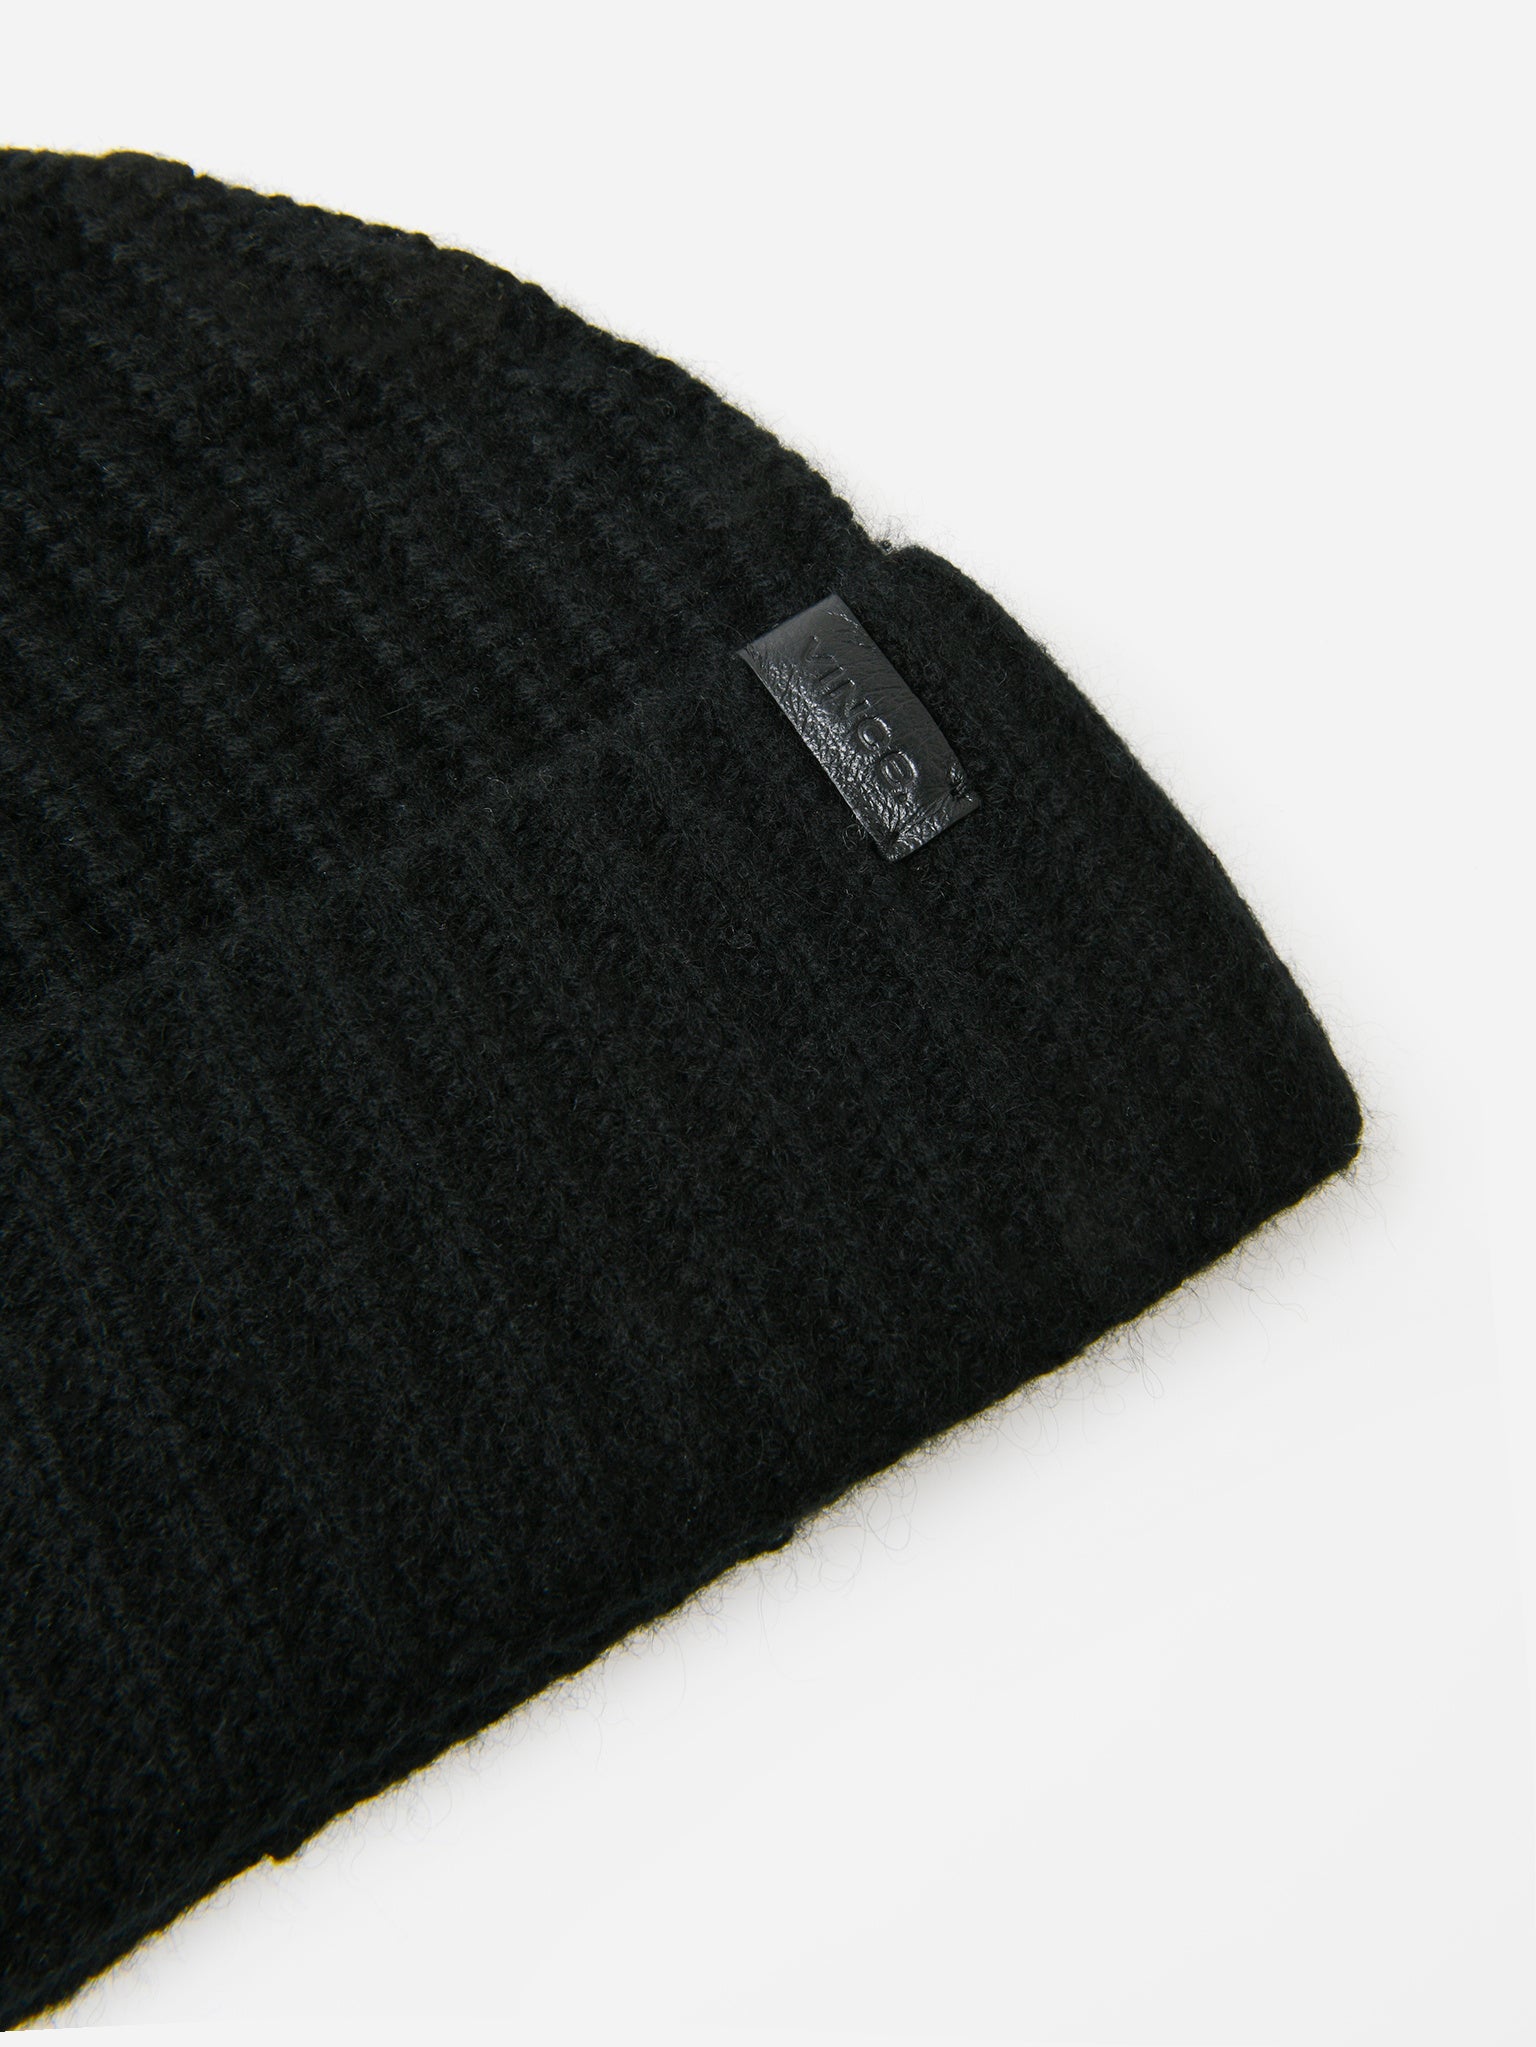 Vince Men's Wool Cashmere Shaker Stitch Hat